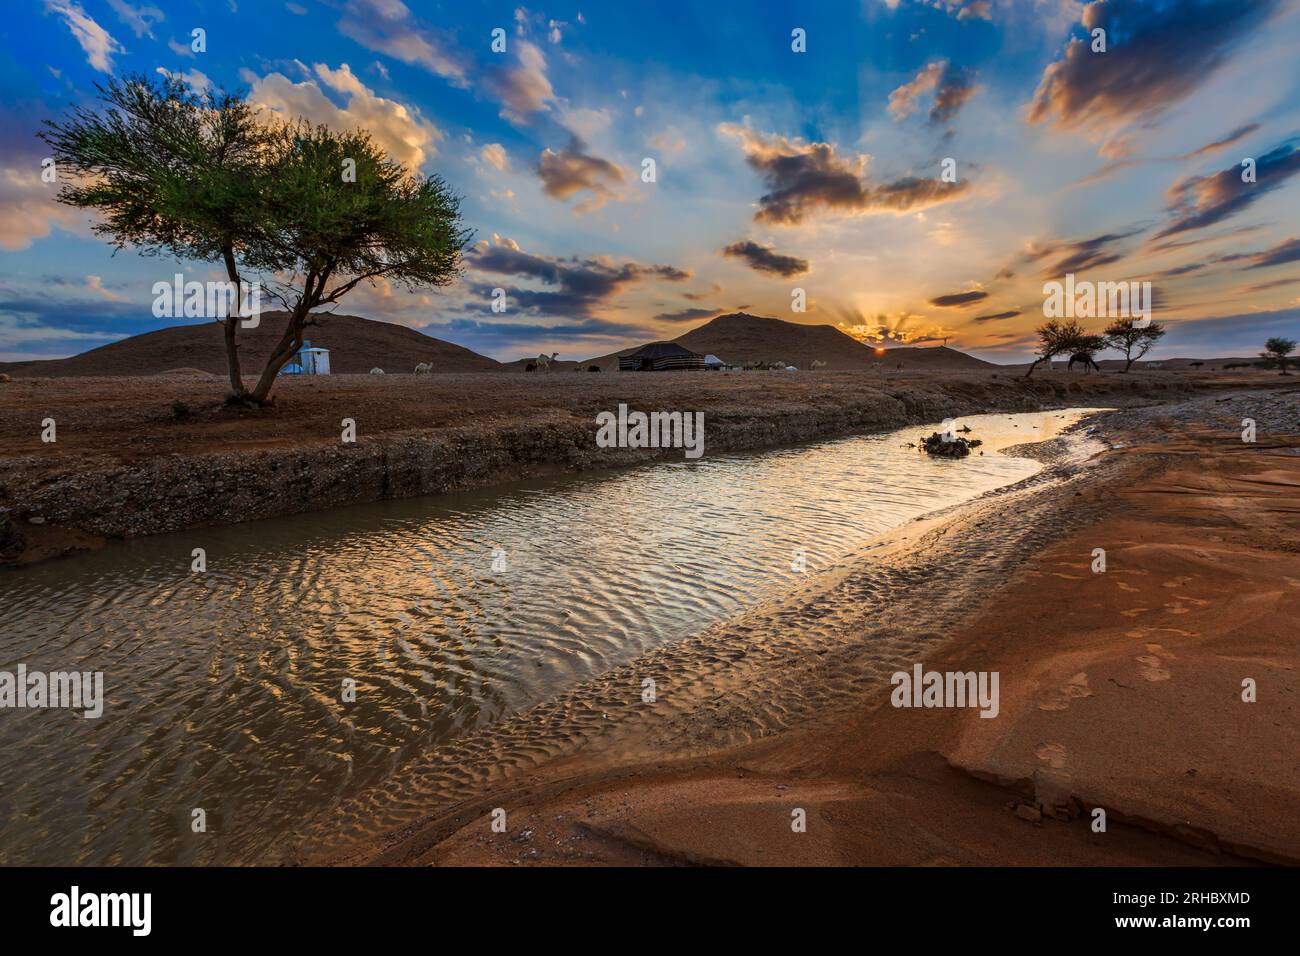 Flooded desert valley at sunset, Saudi Arabia Stock Photo